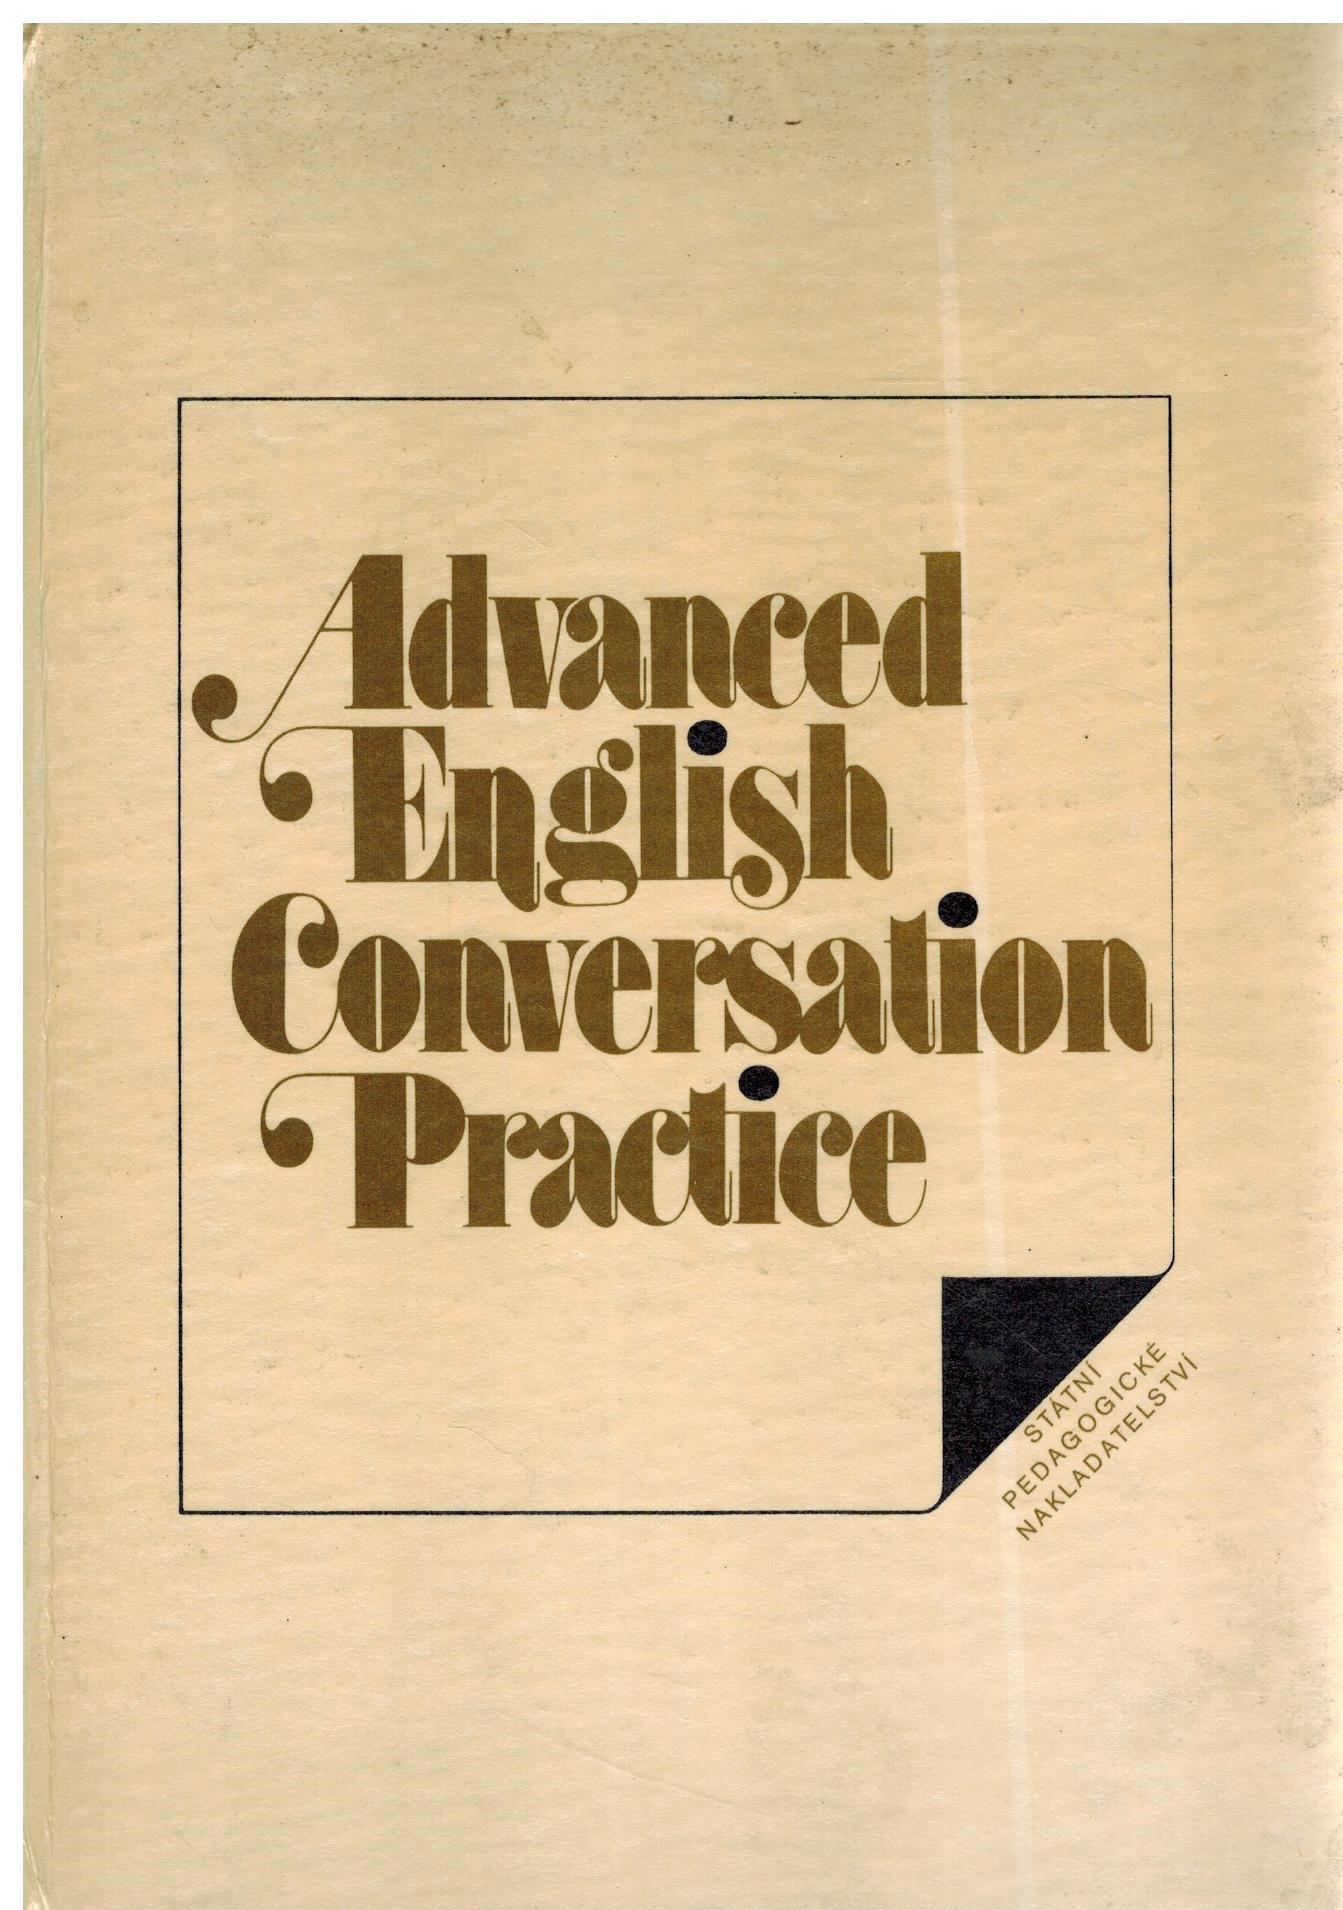 ADVANCED ENGLISH CONVERSATION PRACTICE